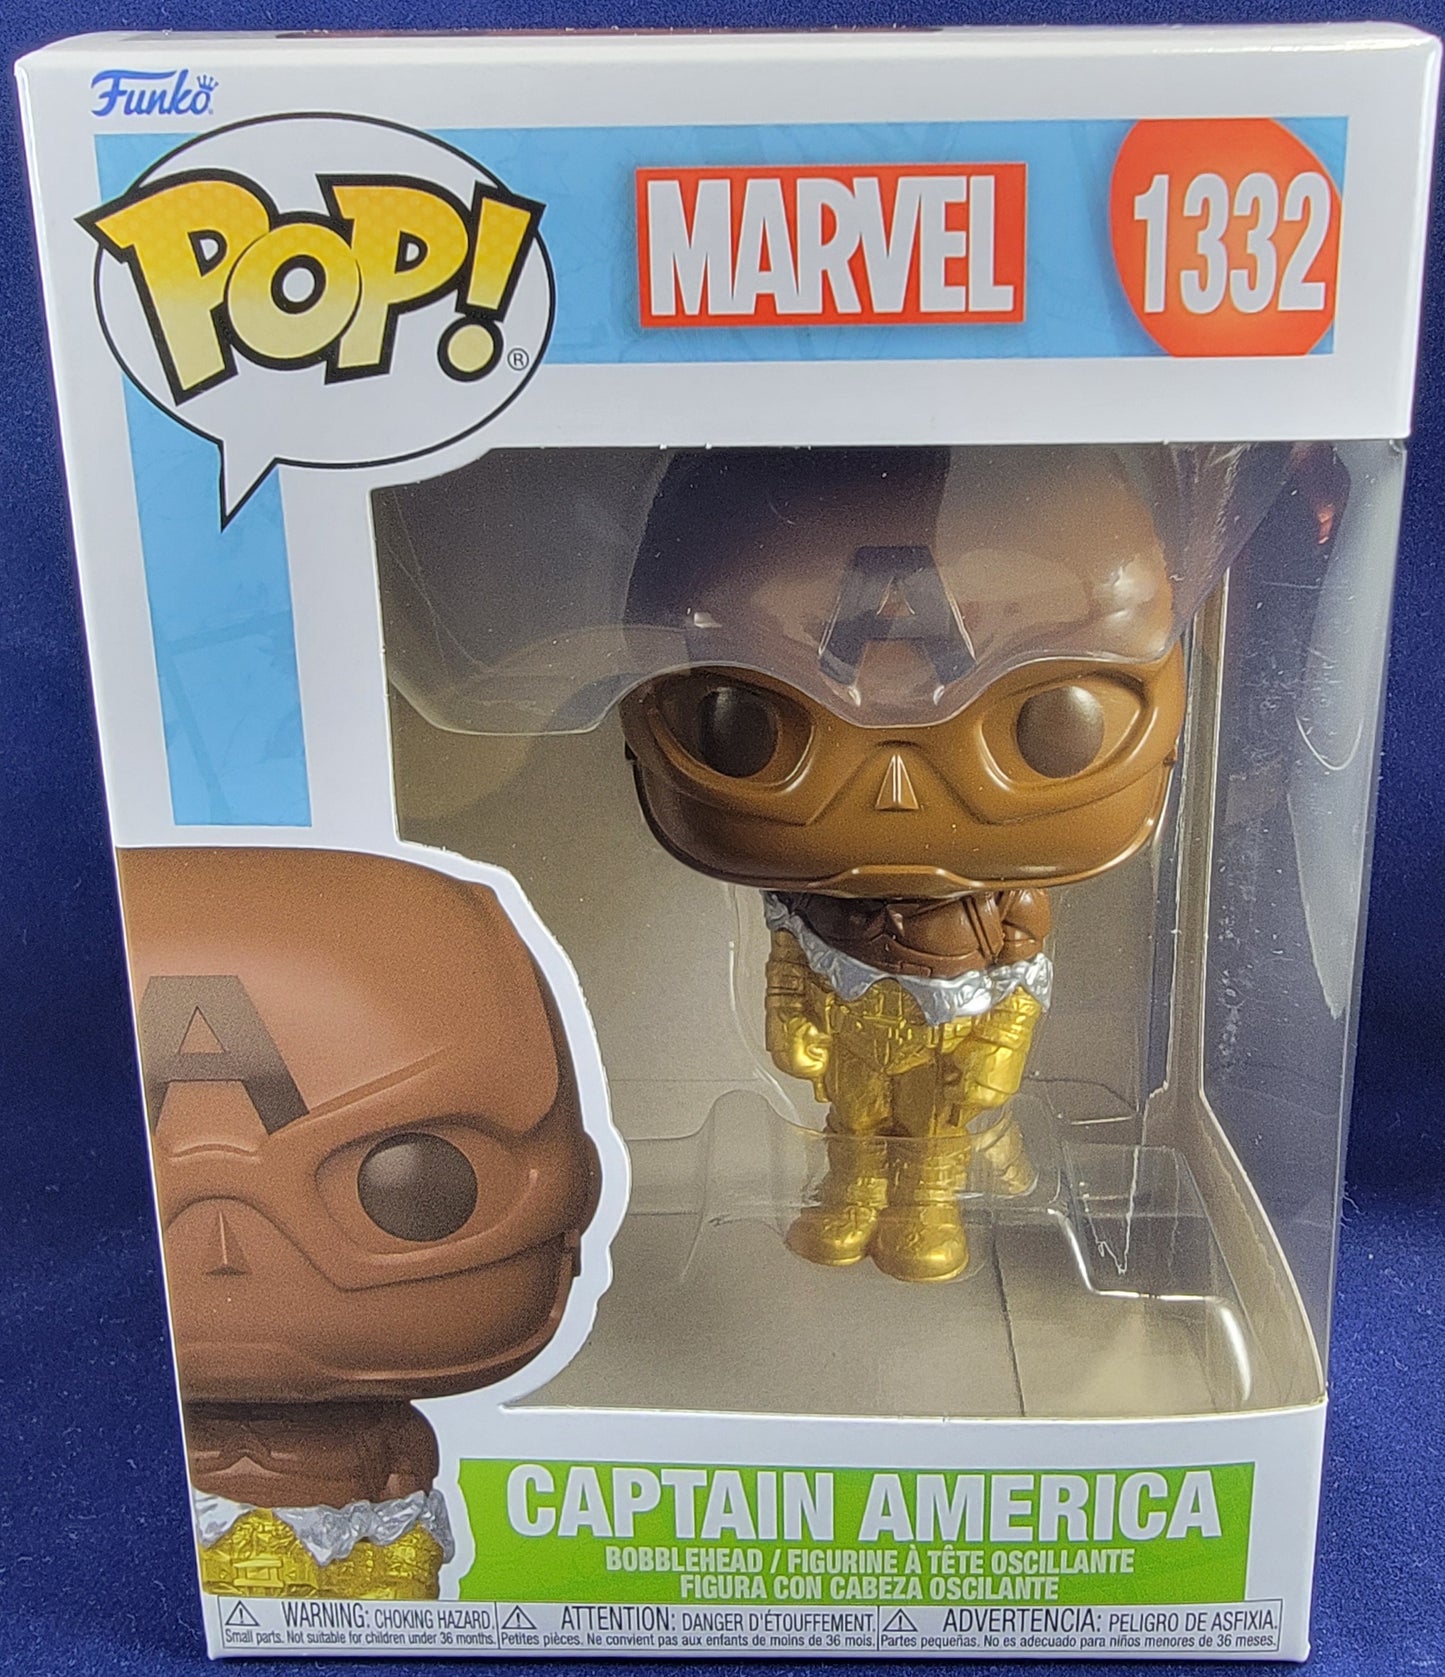 Captain America funko # 1332 (nib)
With pop protector